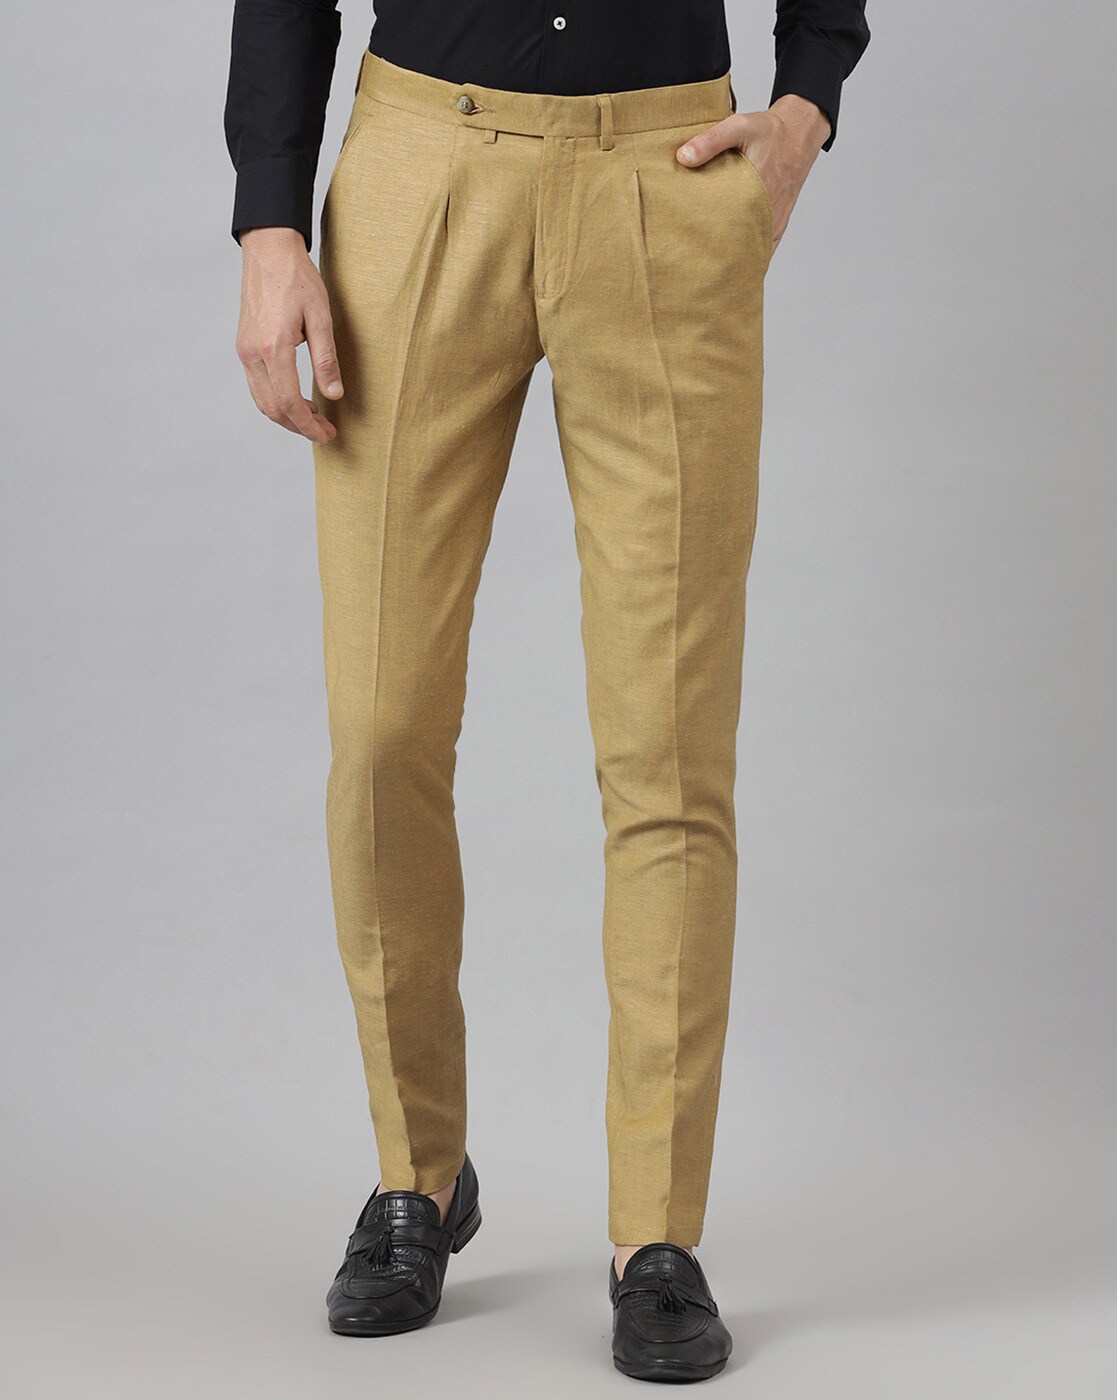 MANCREW Formal Pants for men  Formal Trousers Combo  Beige Khaki